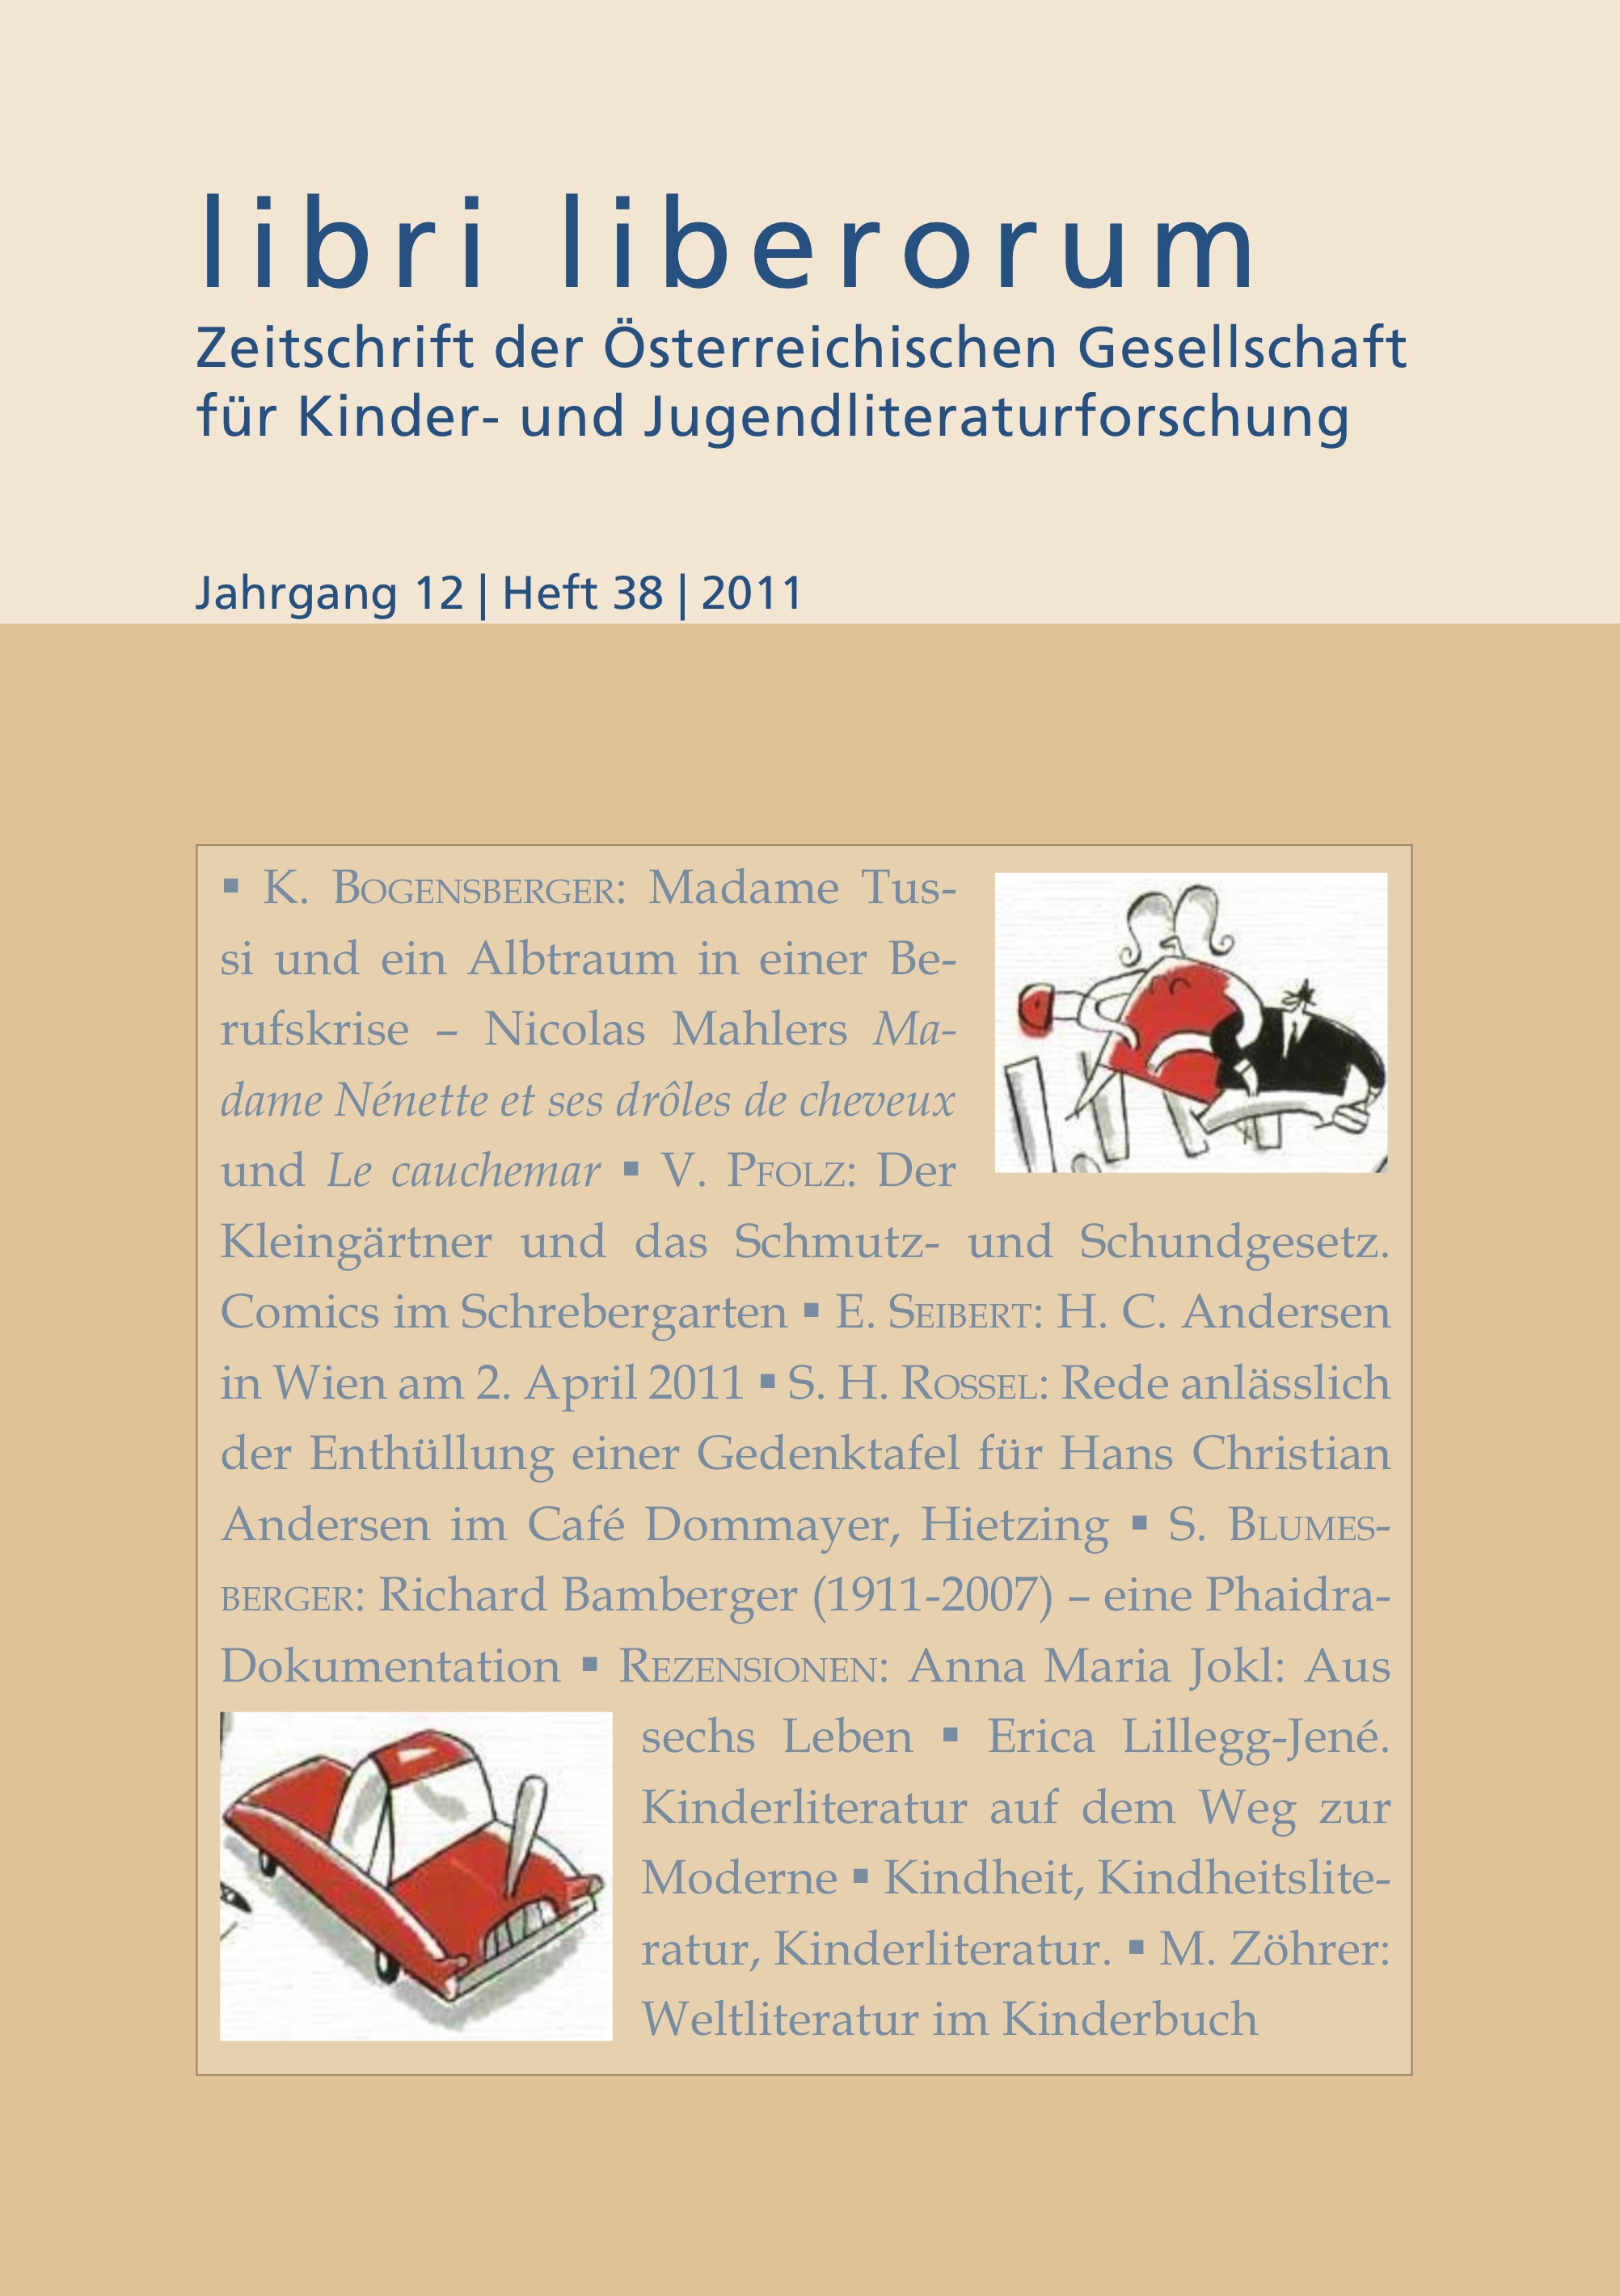 					Ansehen libri liberorum (Jahrgang 12/Heft 38/2011)
				